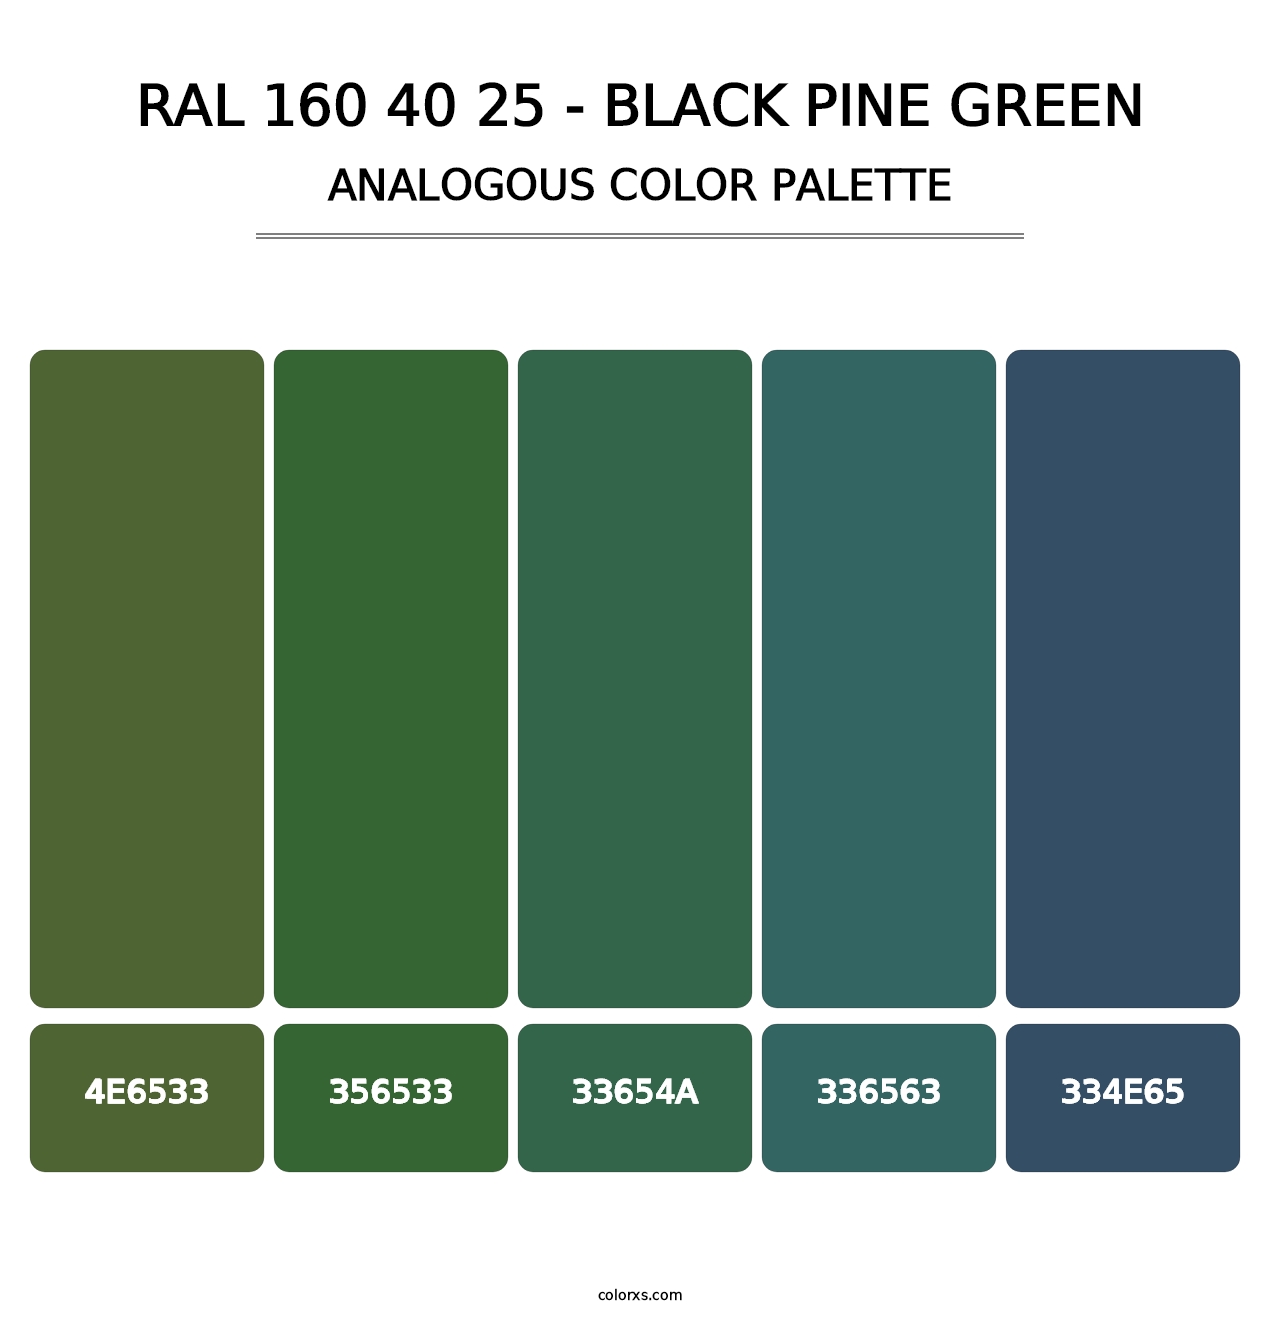 RAL 160 40 25 - Black Pine Green - Analogous Color Palette